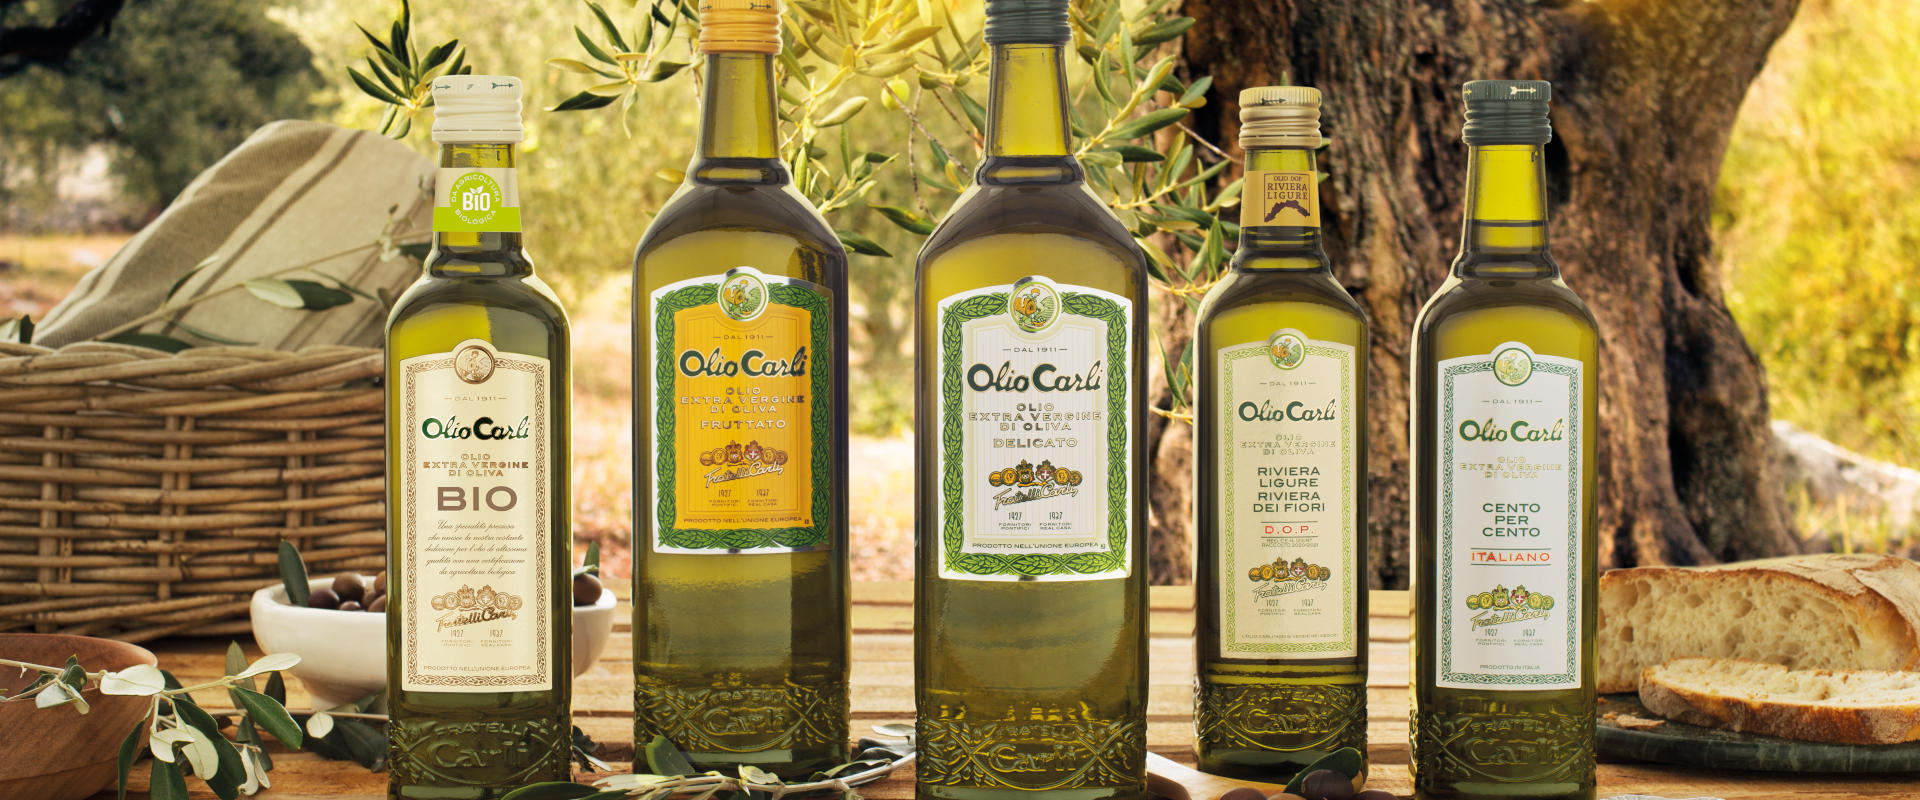 Carli Extra Virgin Olive Oil